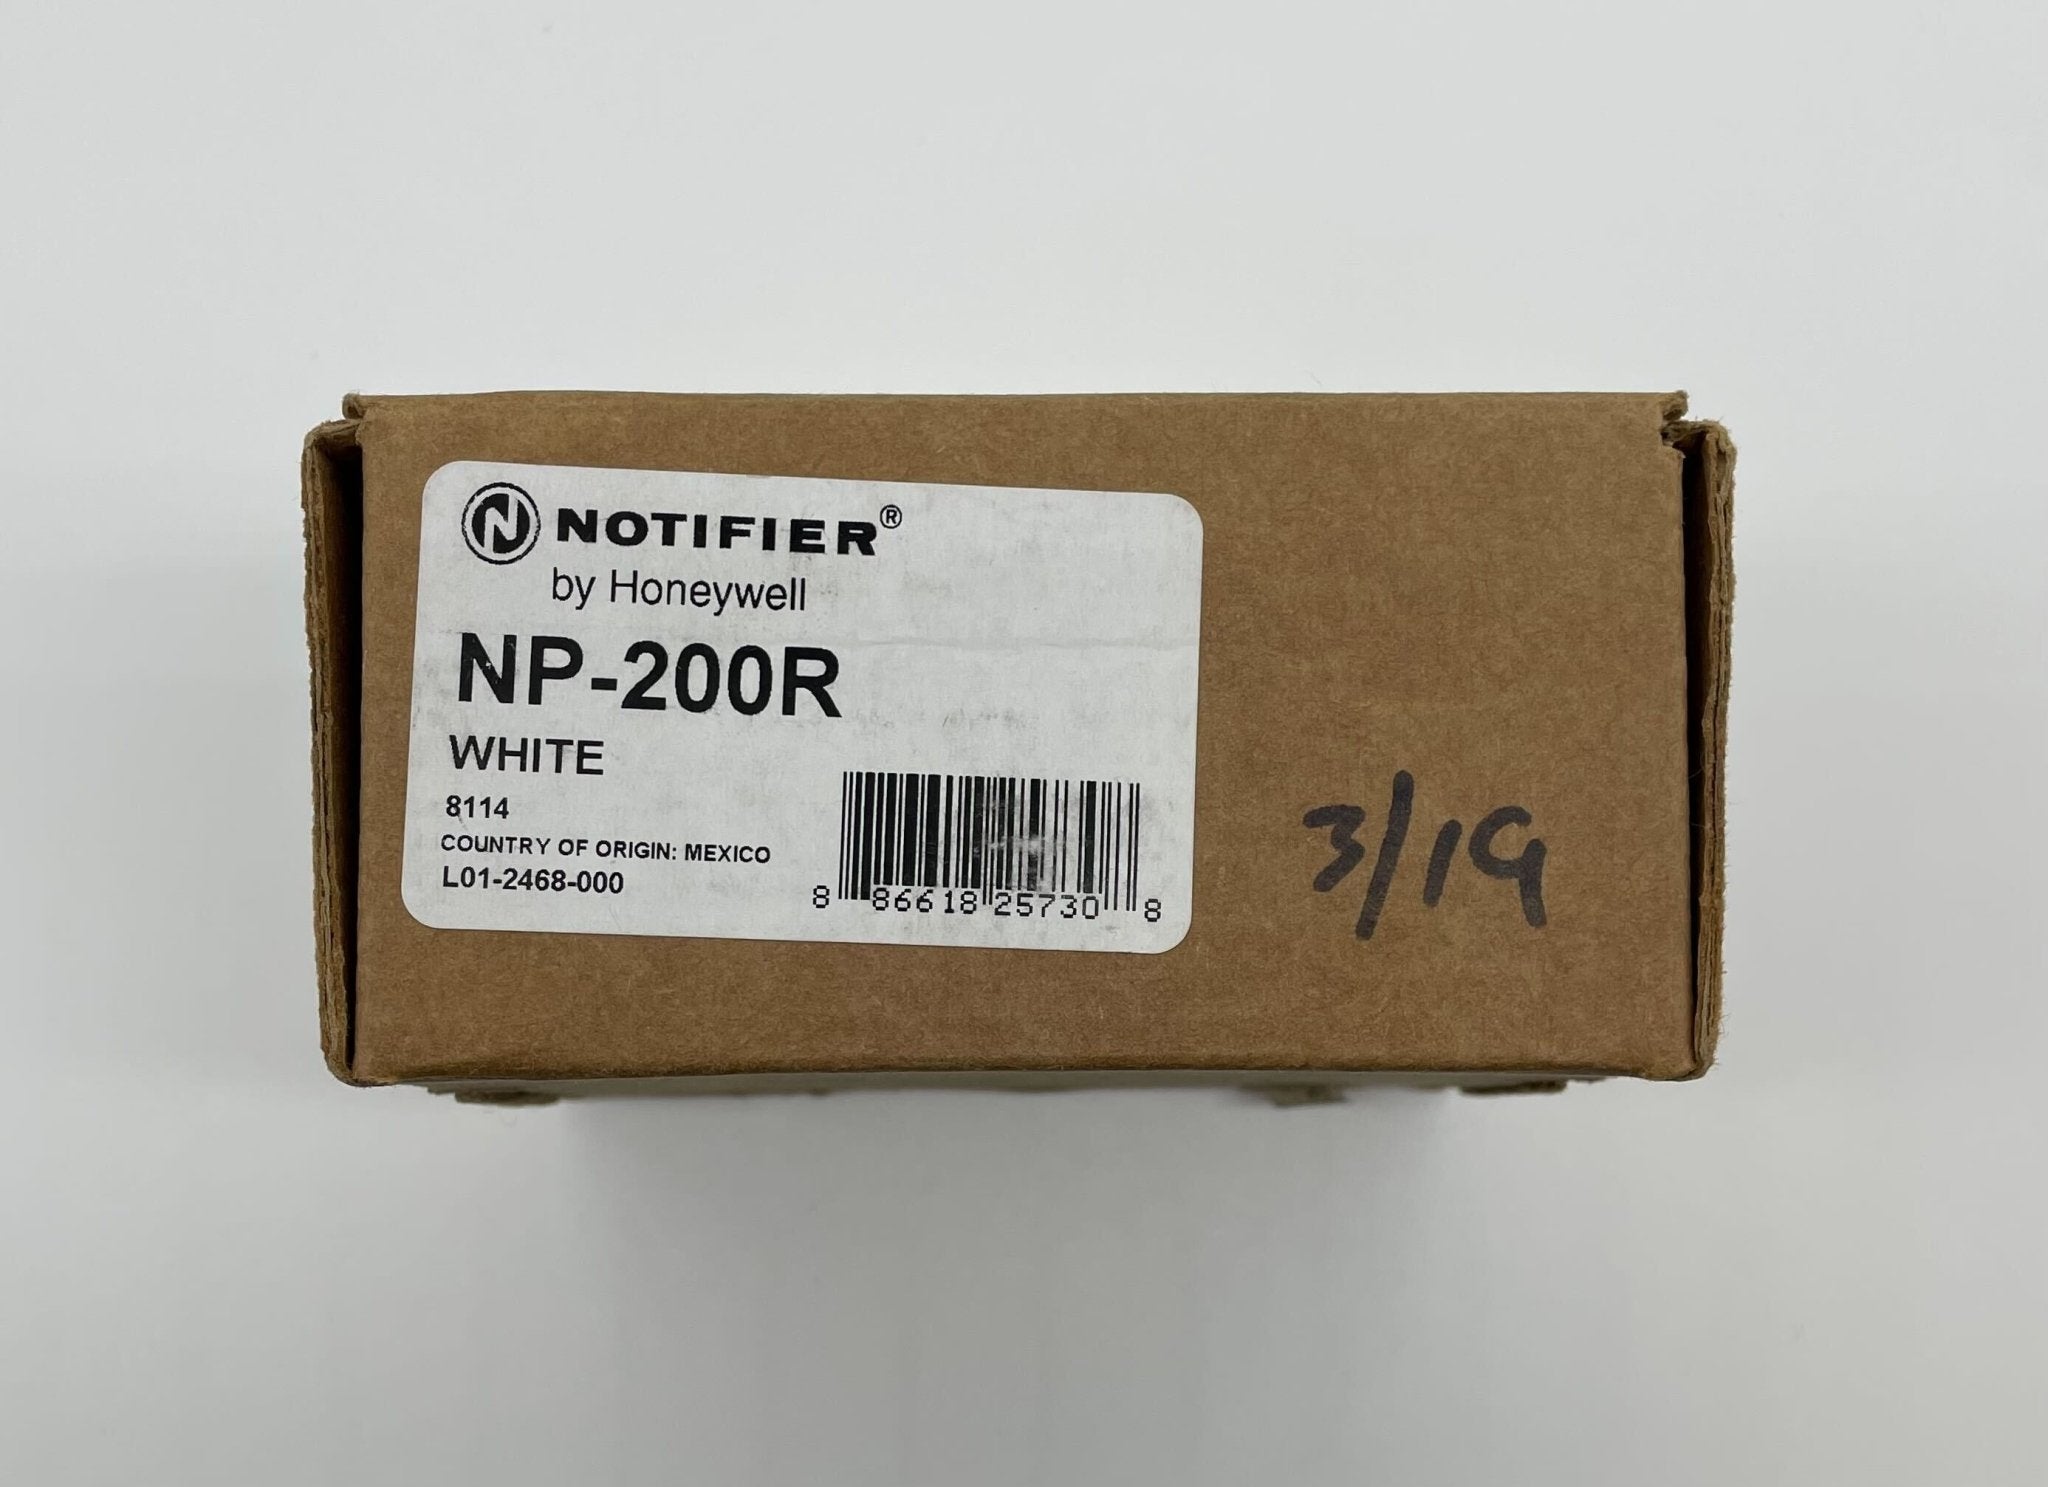 Notifier NP-200R - The Fire Alarm Supplier